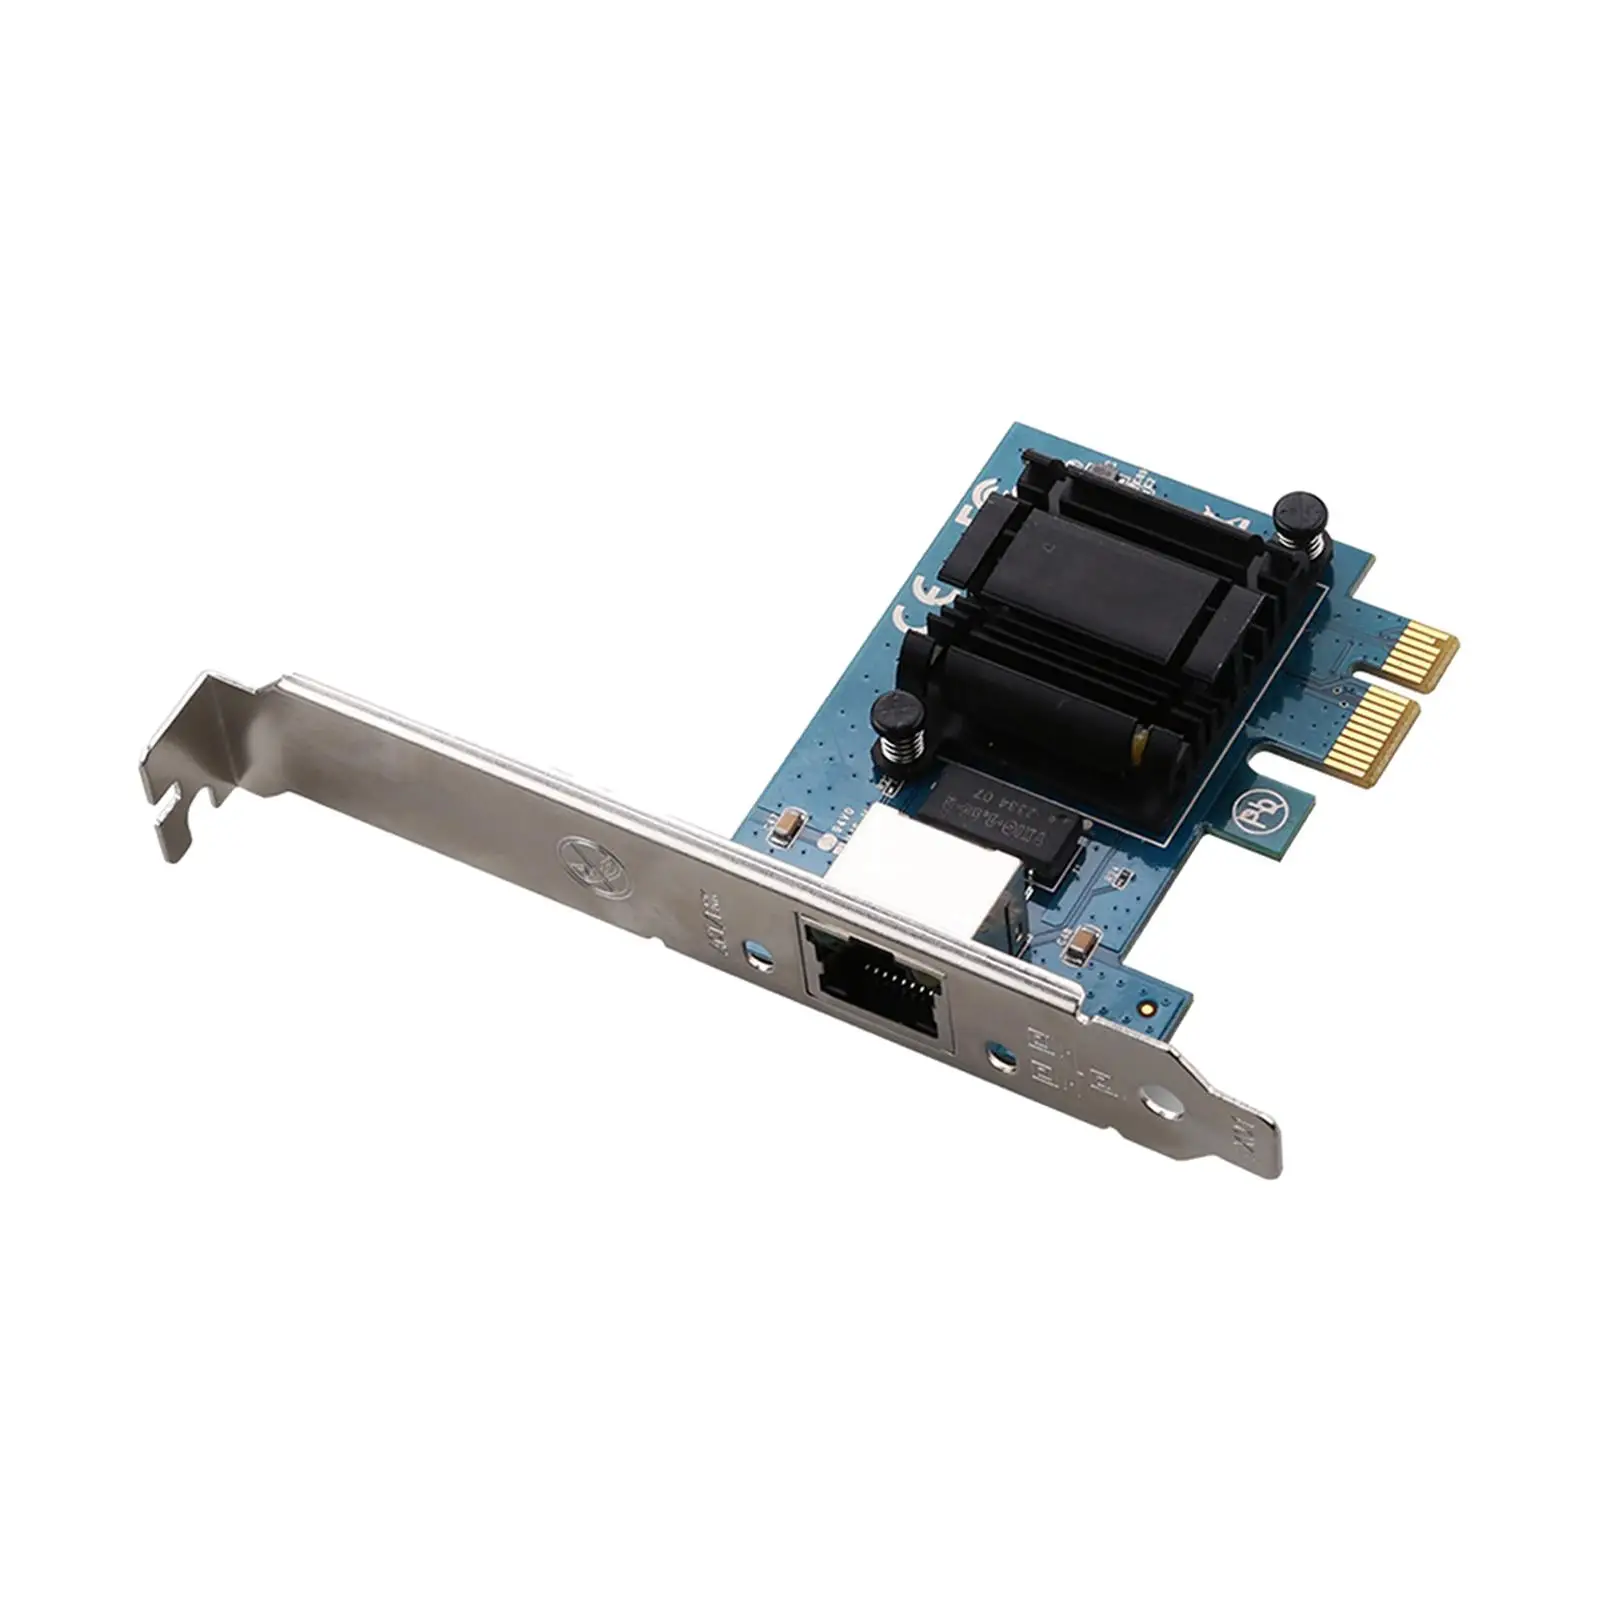 

Mini PCI Express Metal Chipset Single Port 10/100/1000/2500Mbps LAN Controller Card for RTL8125B Network Card Ethernet Card RJ45